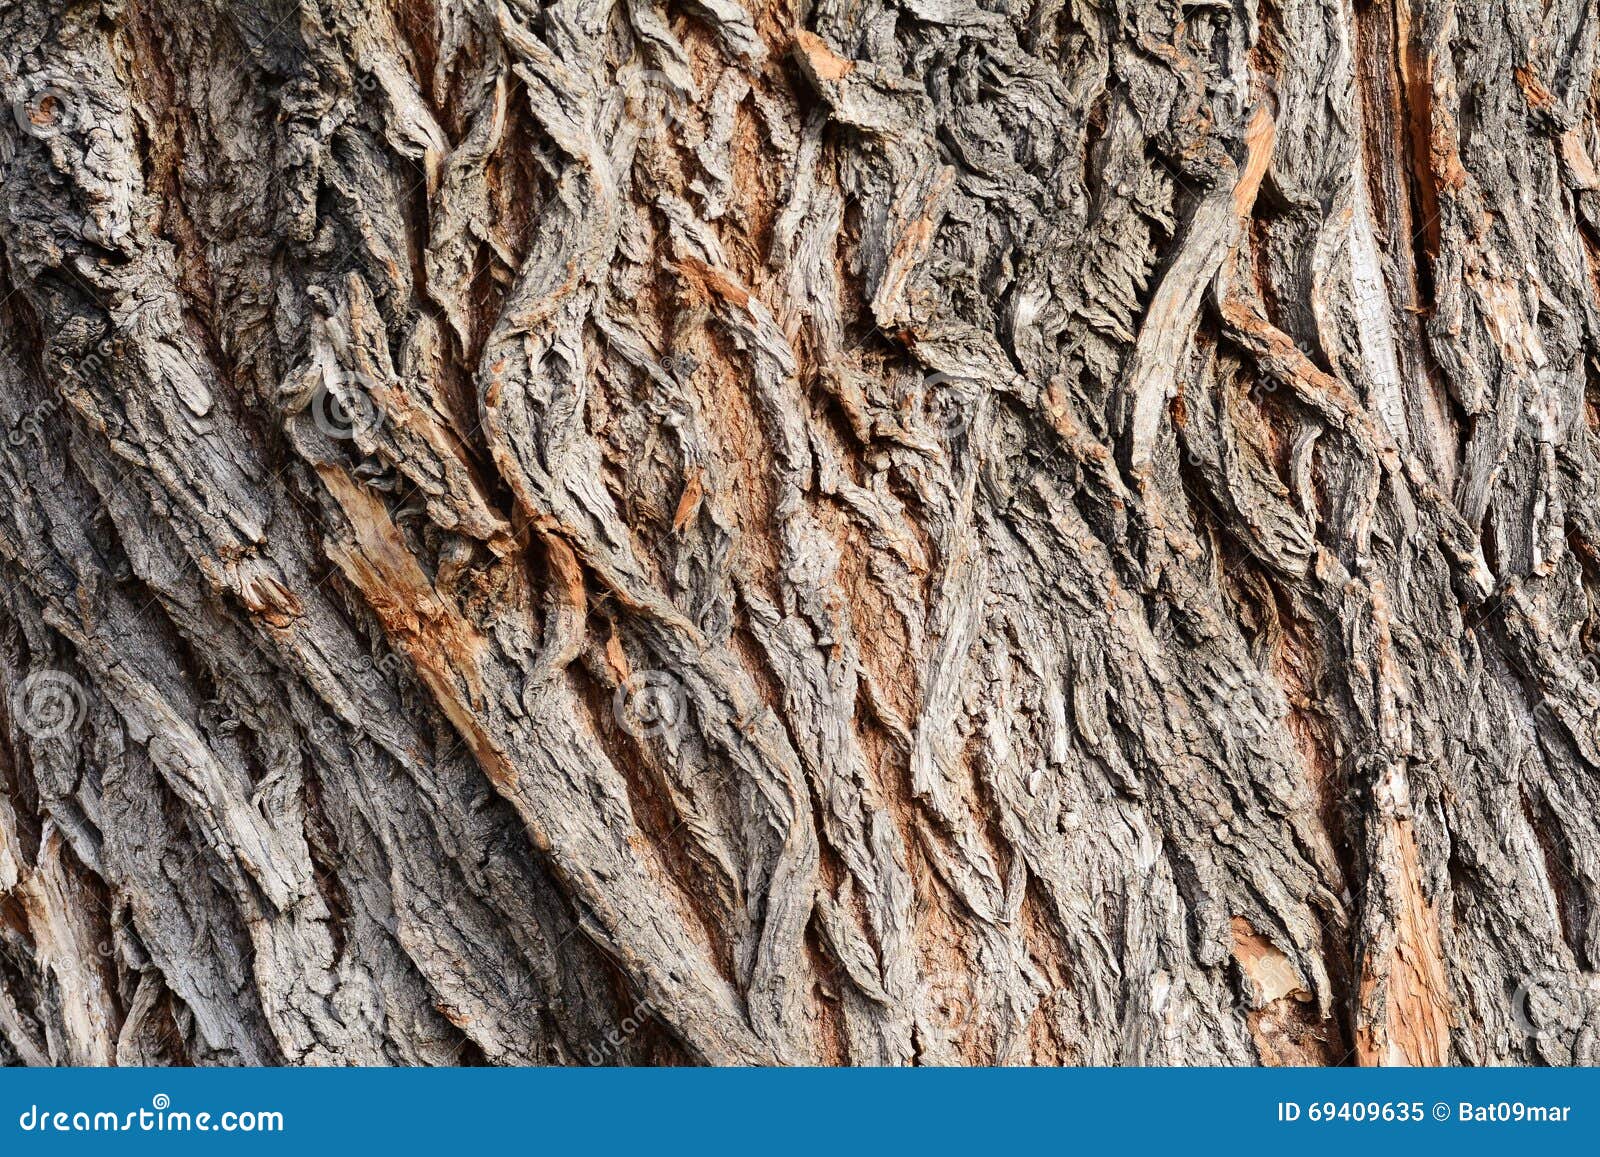 tree bark texture, white willow (salix alba) bark